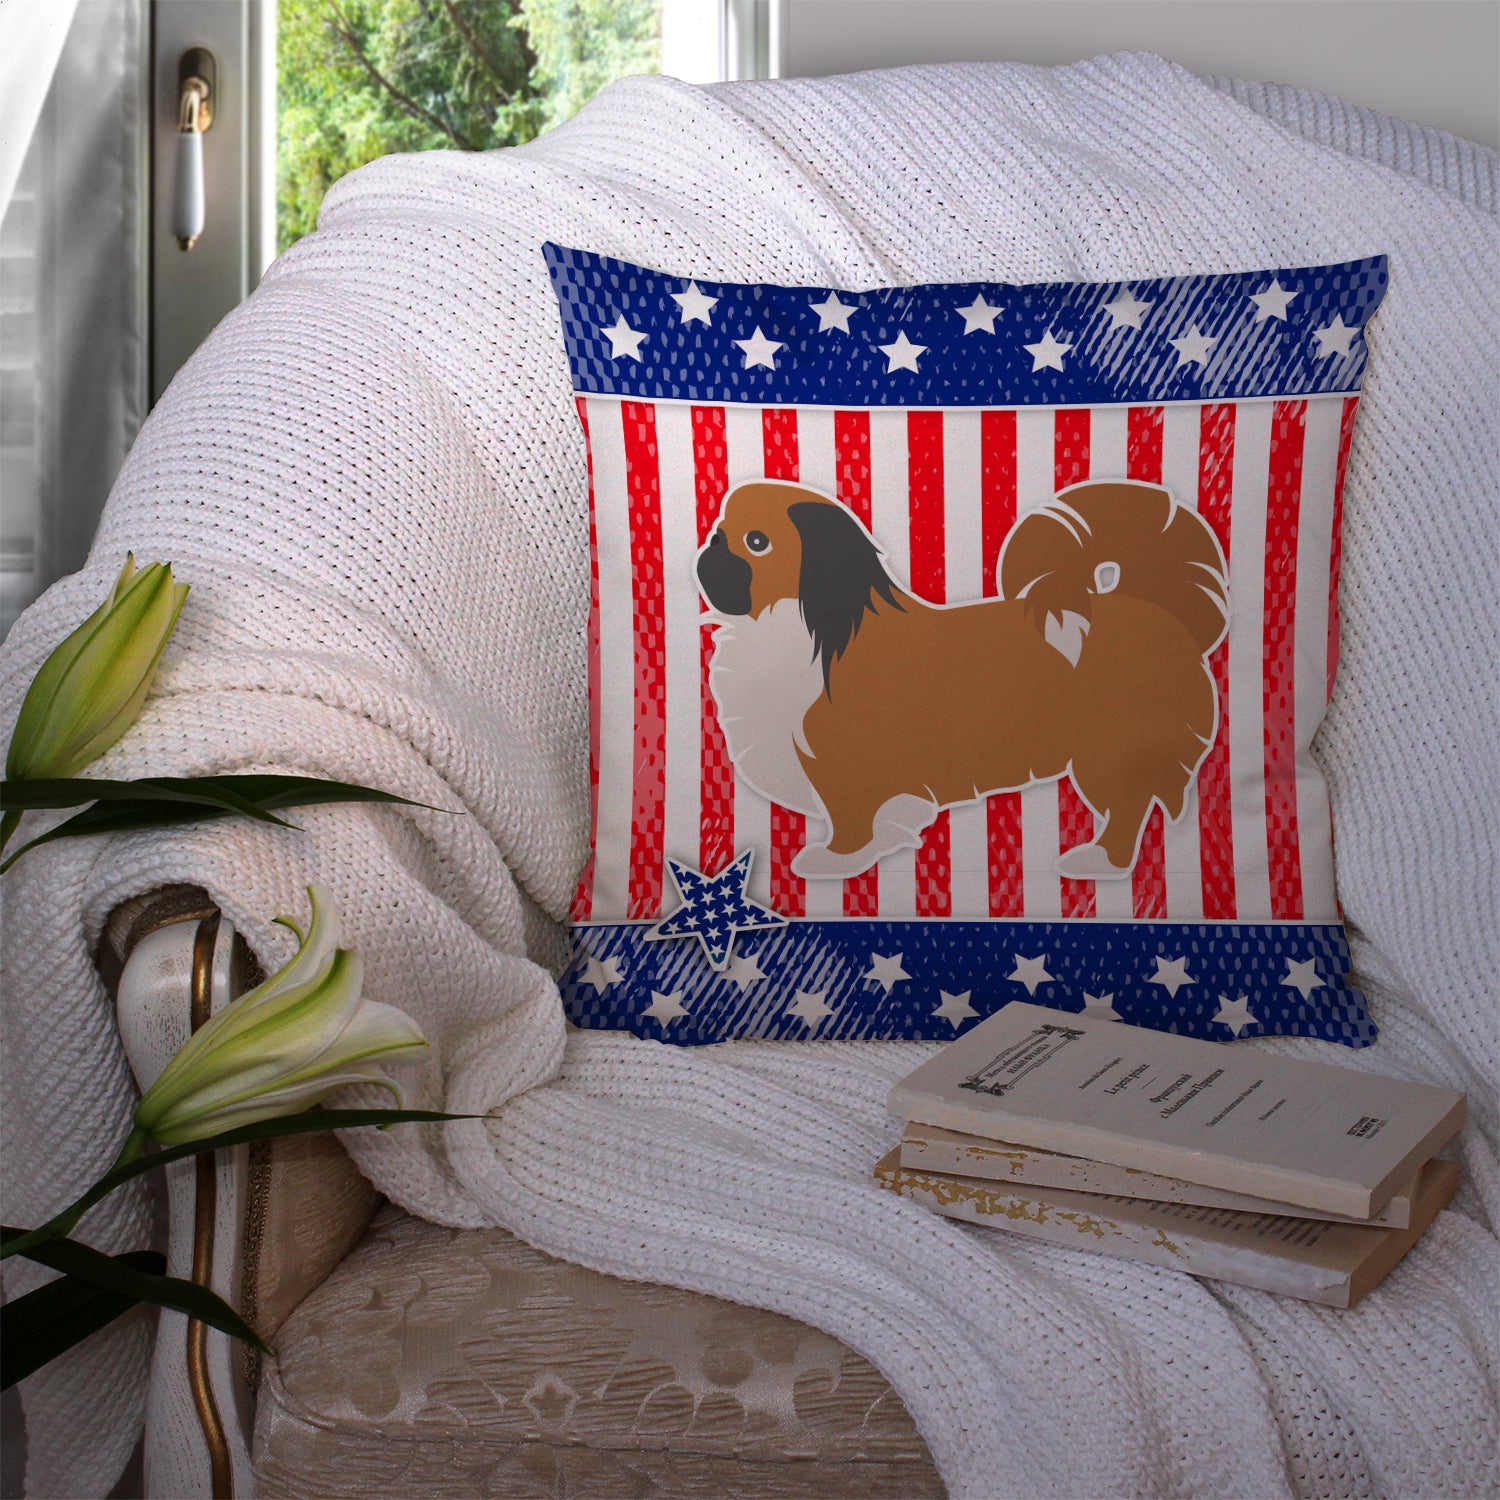 USA Patriotic Pekingese Fabric Decorative Pillow BB3338PW1414 - the-store.com